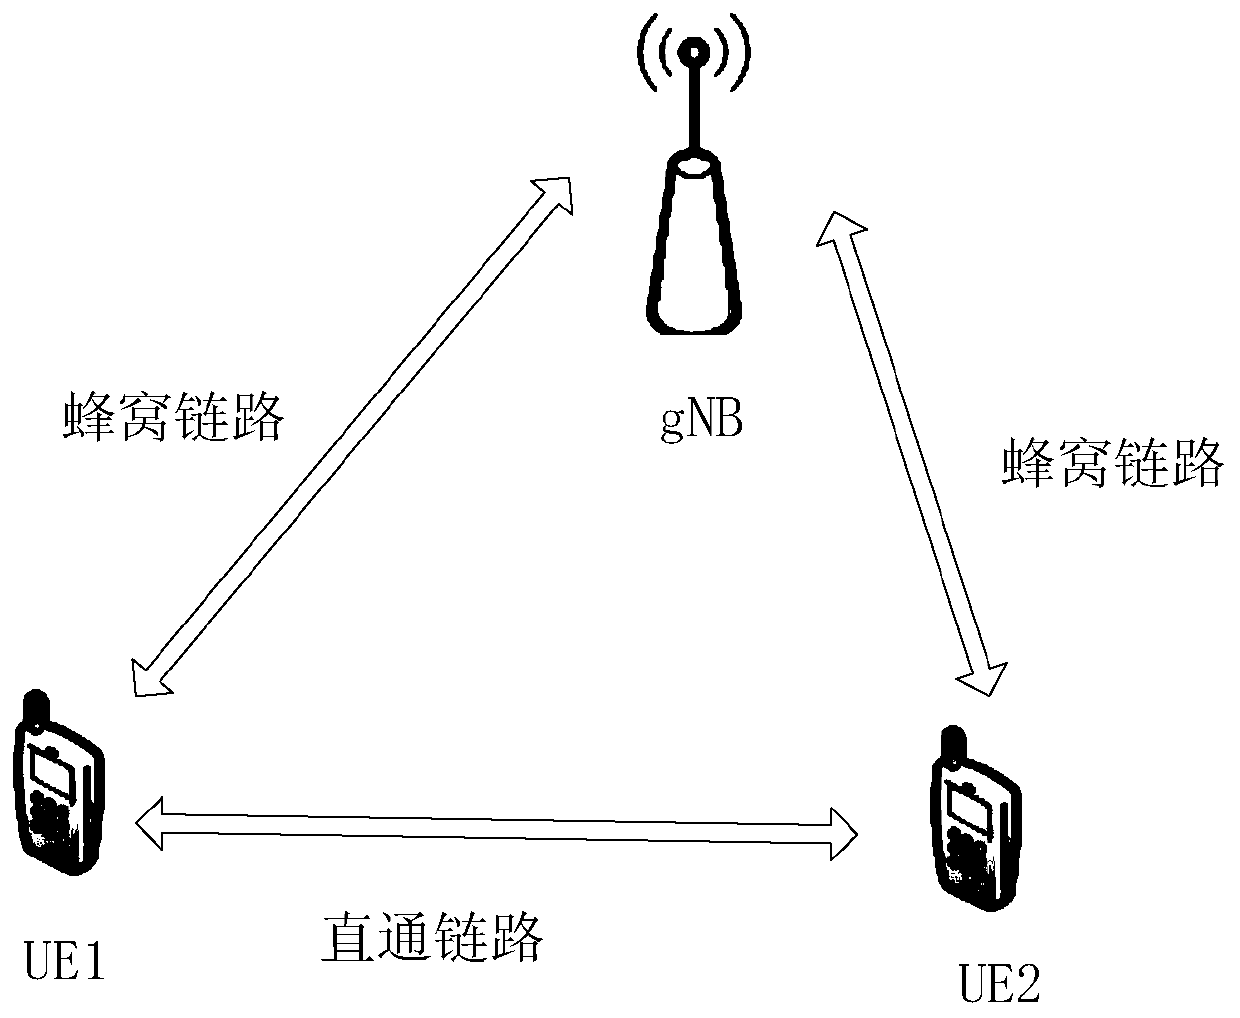 User equipment, network side equipment, wireless communication method and storage medium